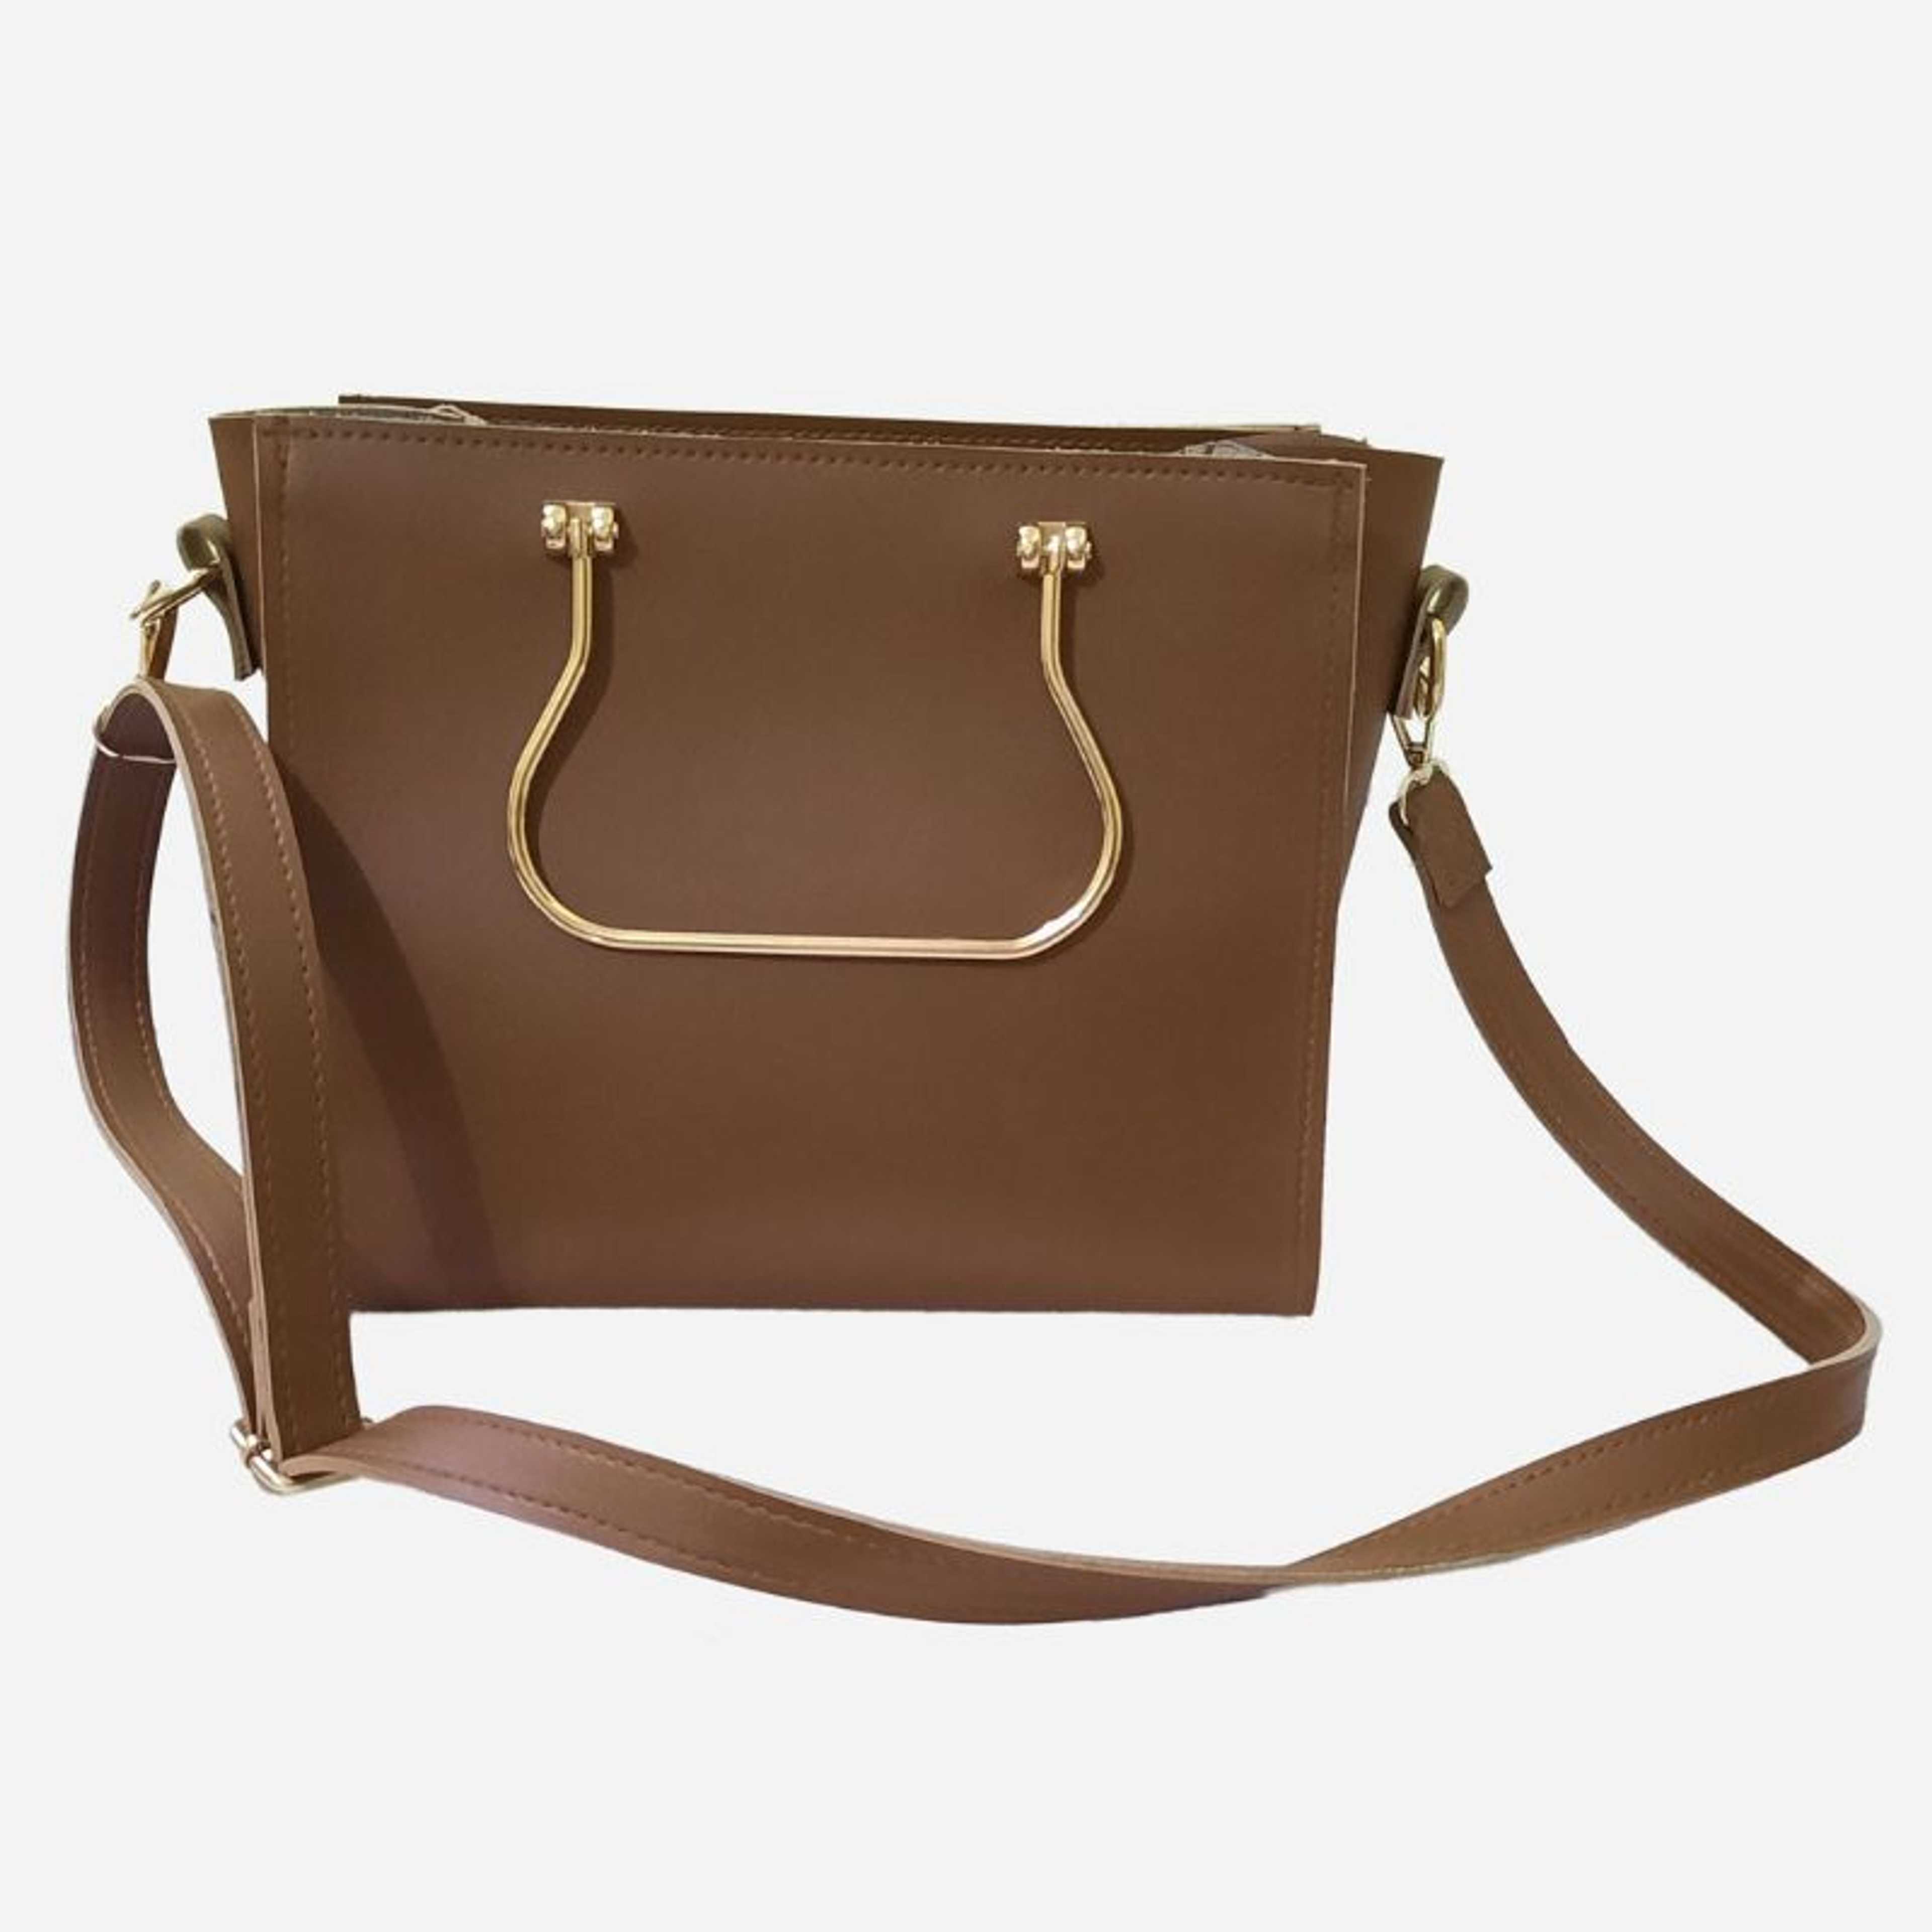 Handbag For Women - Dark Brown Sofia Handbag